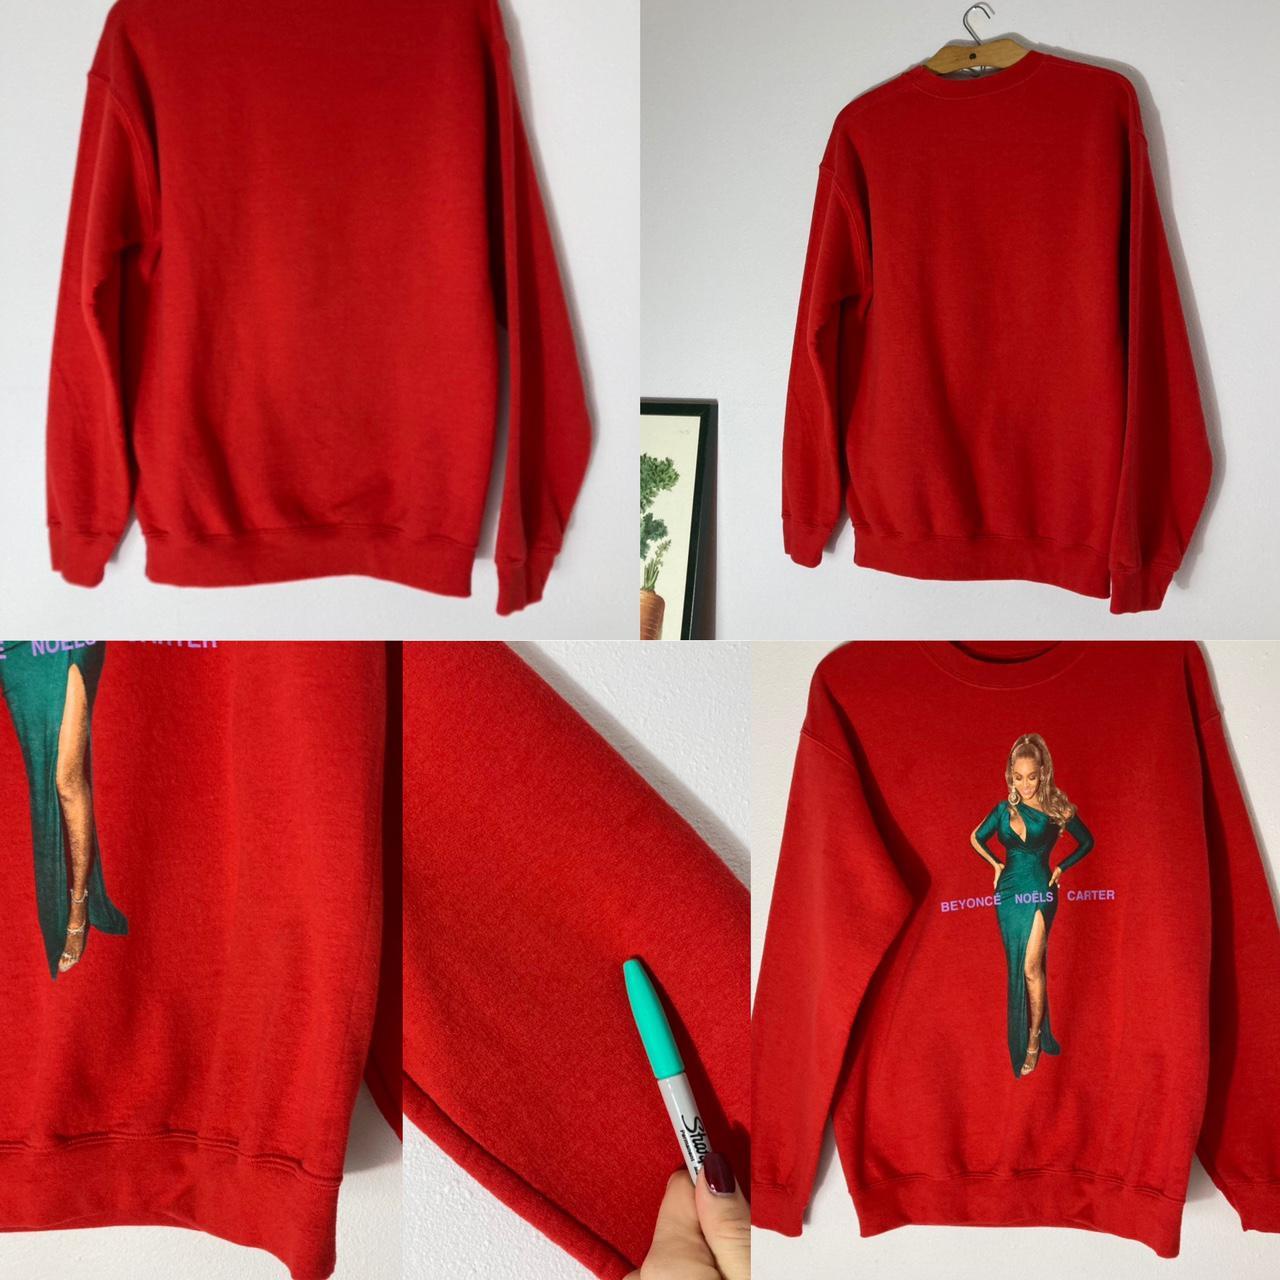 Product Image 3 - Red Beyoncé NOELS Carter sweatshirt

Perfect